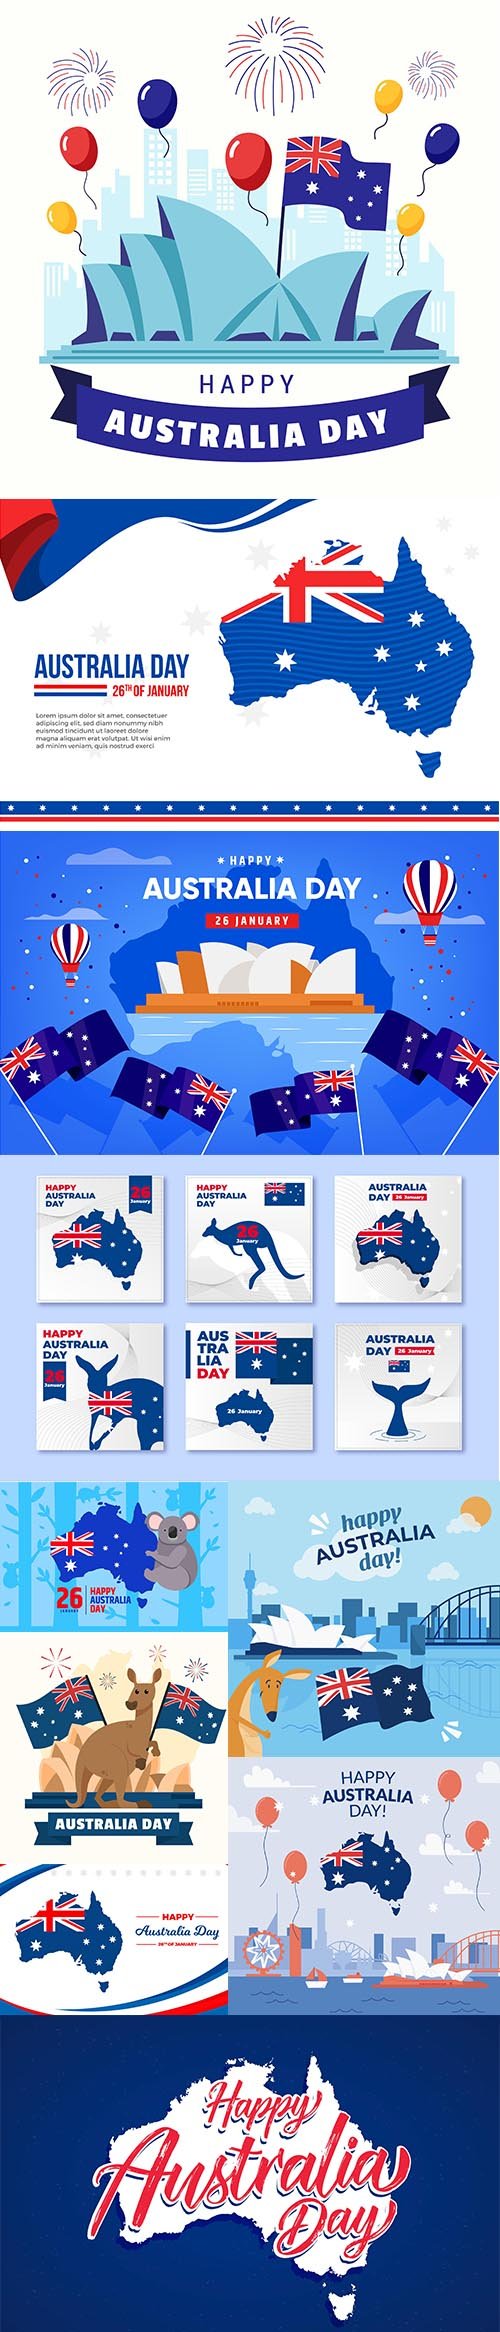 Australia day greeting cards